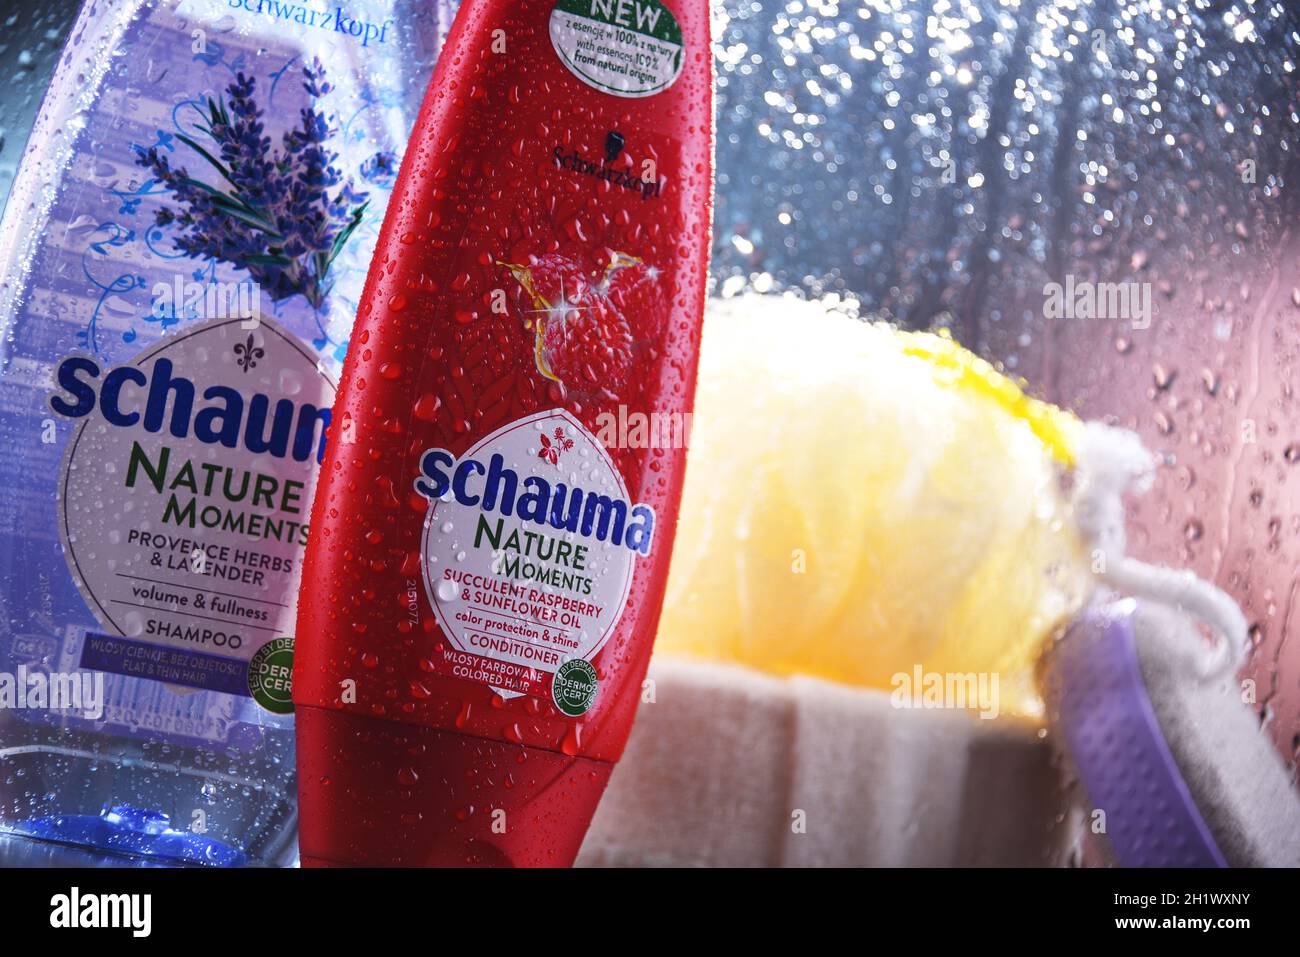 POZNAN, POL - OCT 23, 2020: Bottles of Schwarzkopf products, popular brand of first liquid shampoo developed by German chemist Hans Schwarzkopf in 192 Stock Photo